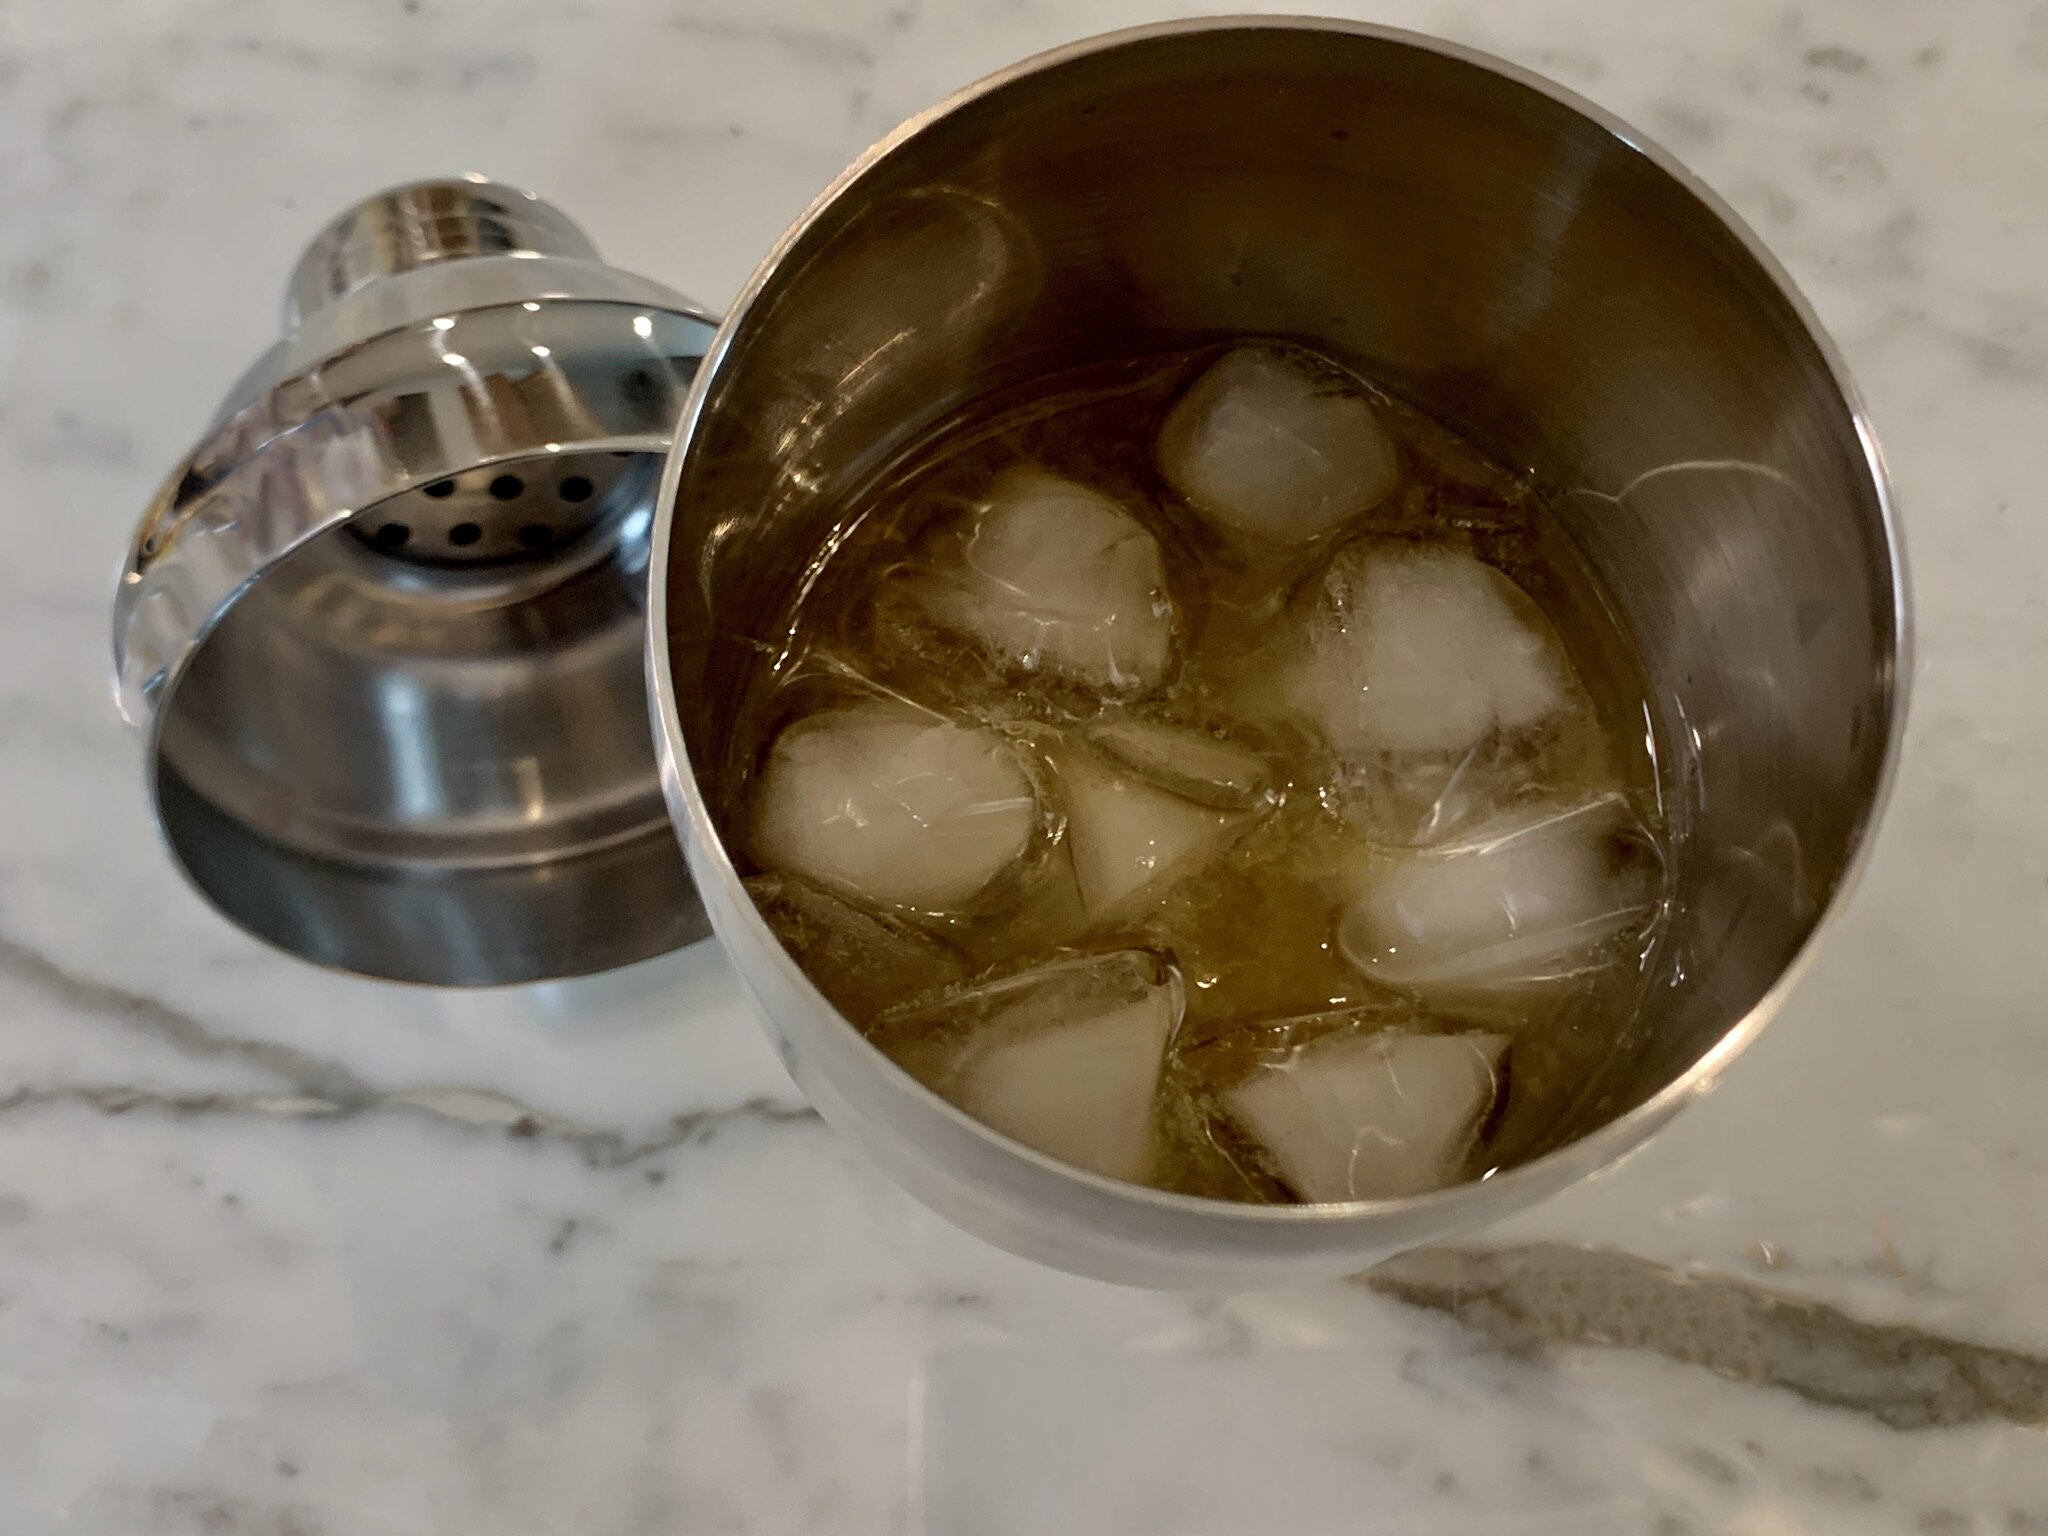 b) Add cocktail ingredients.